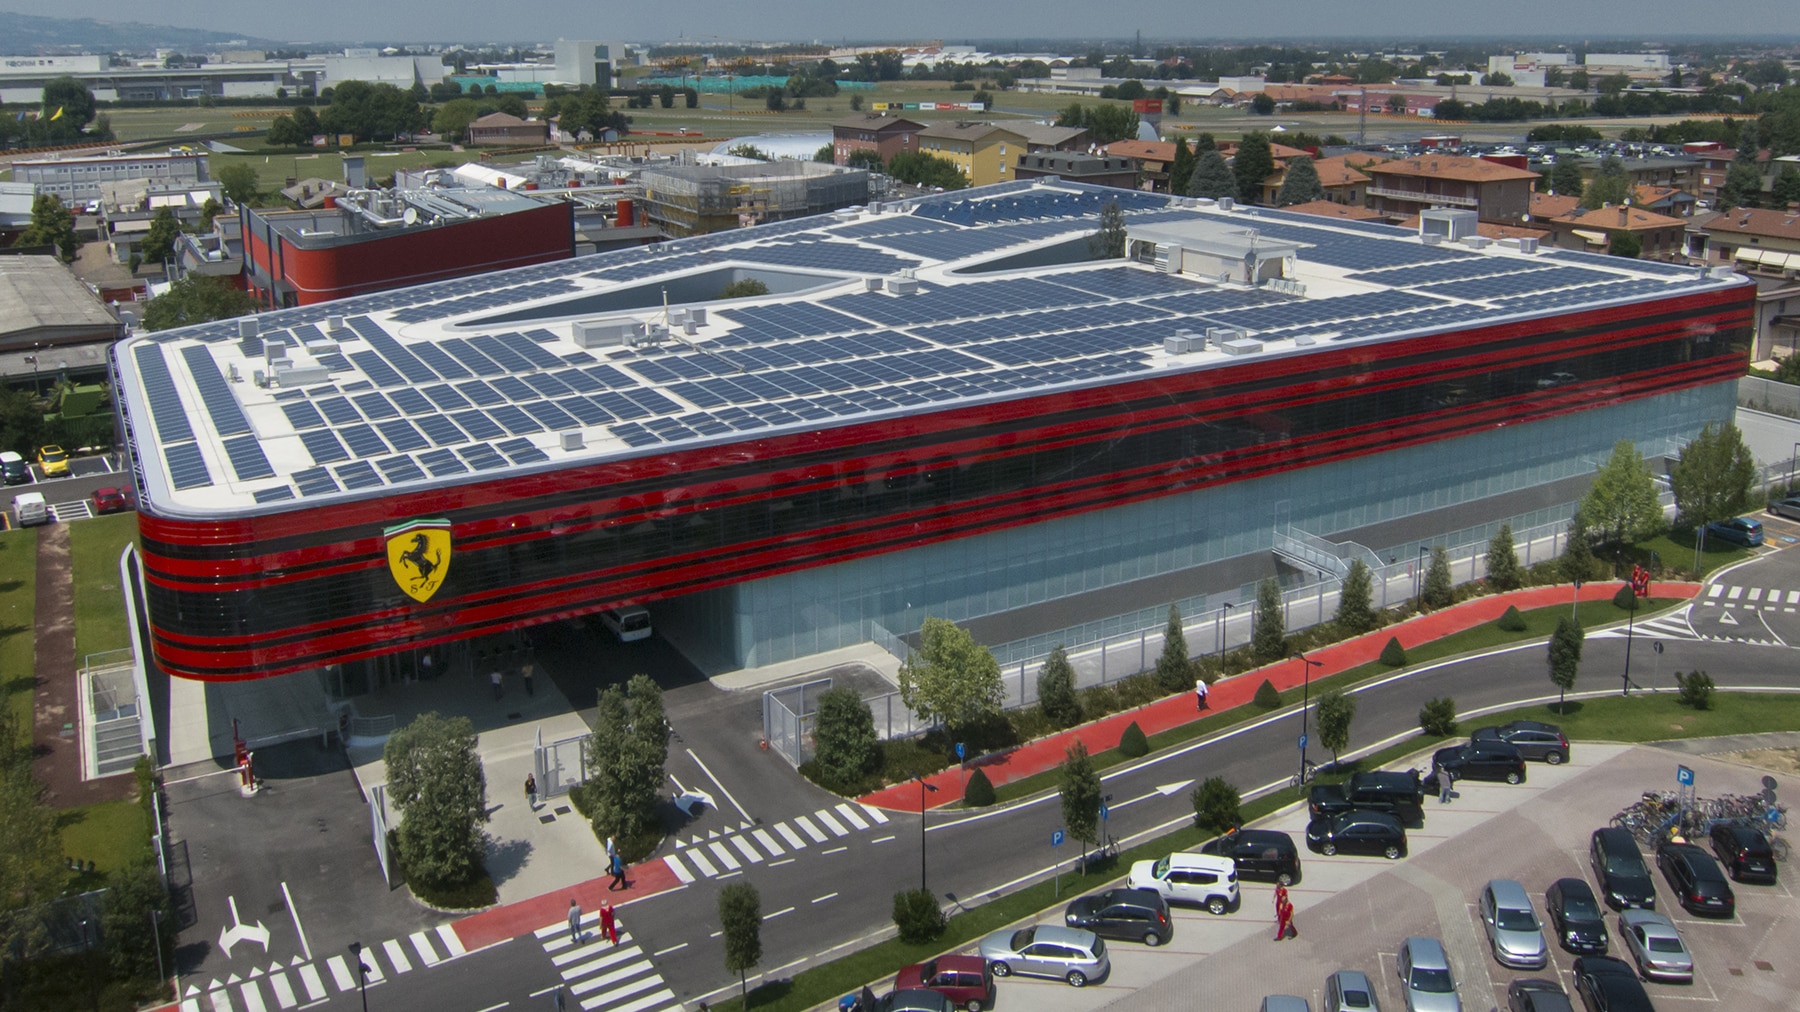 Ferrari: Daten-Kidnapping bei Ferrari, Hacker fordern Lösegeld - AUTO BILD